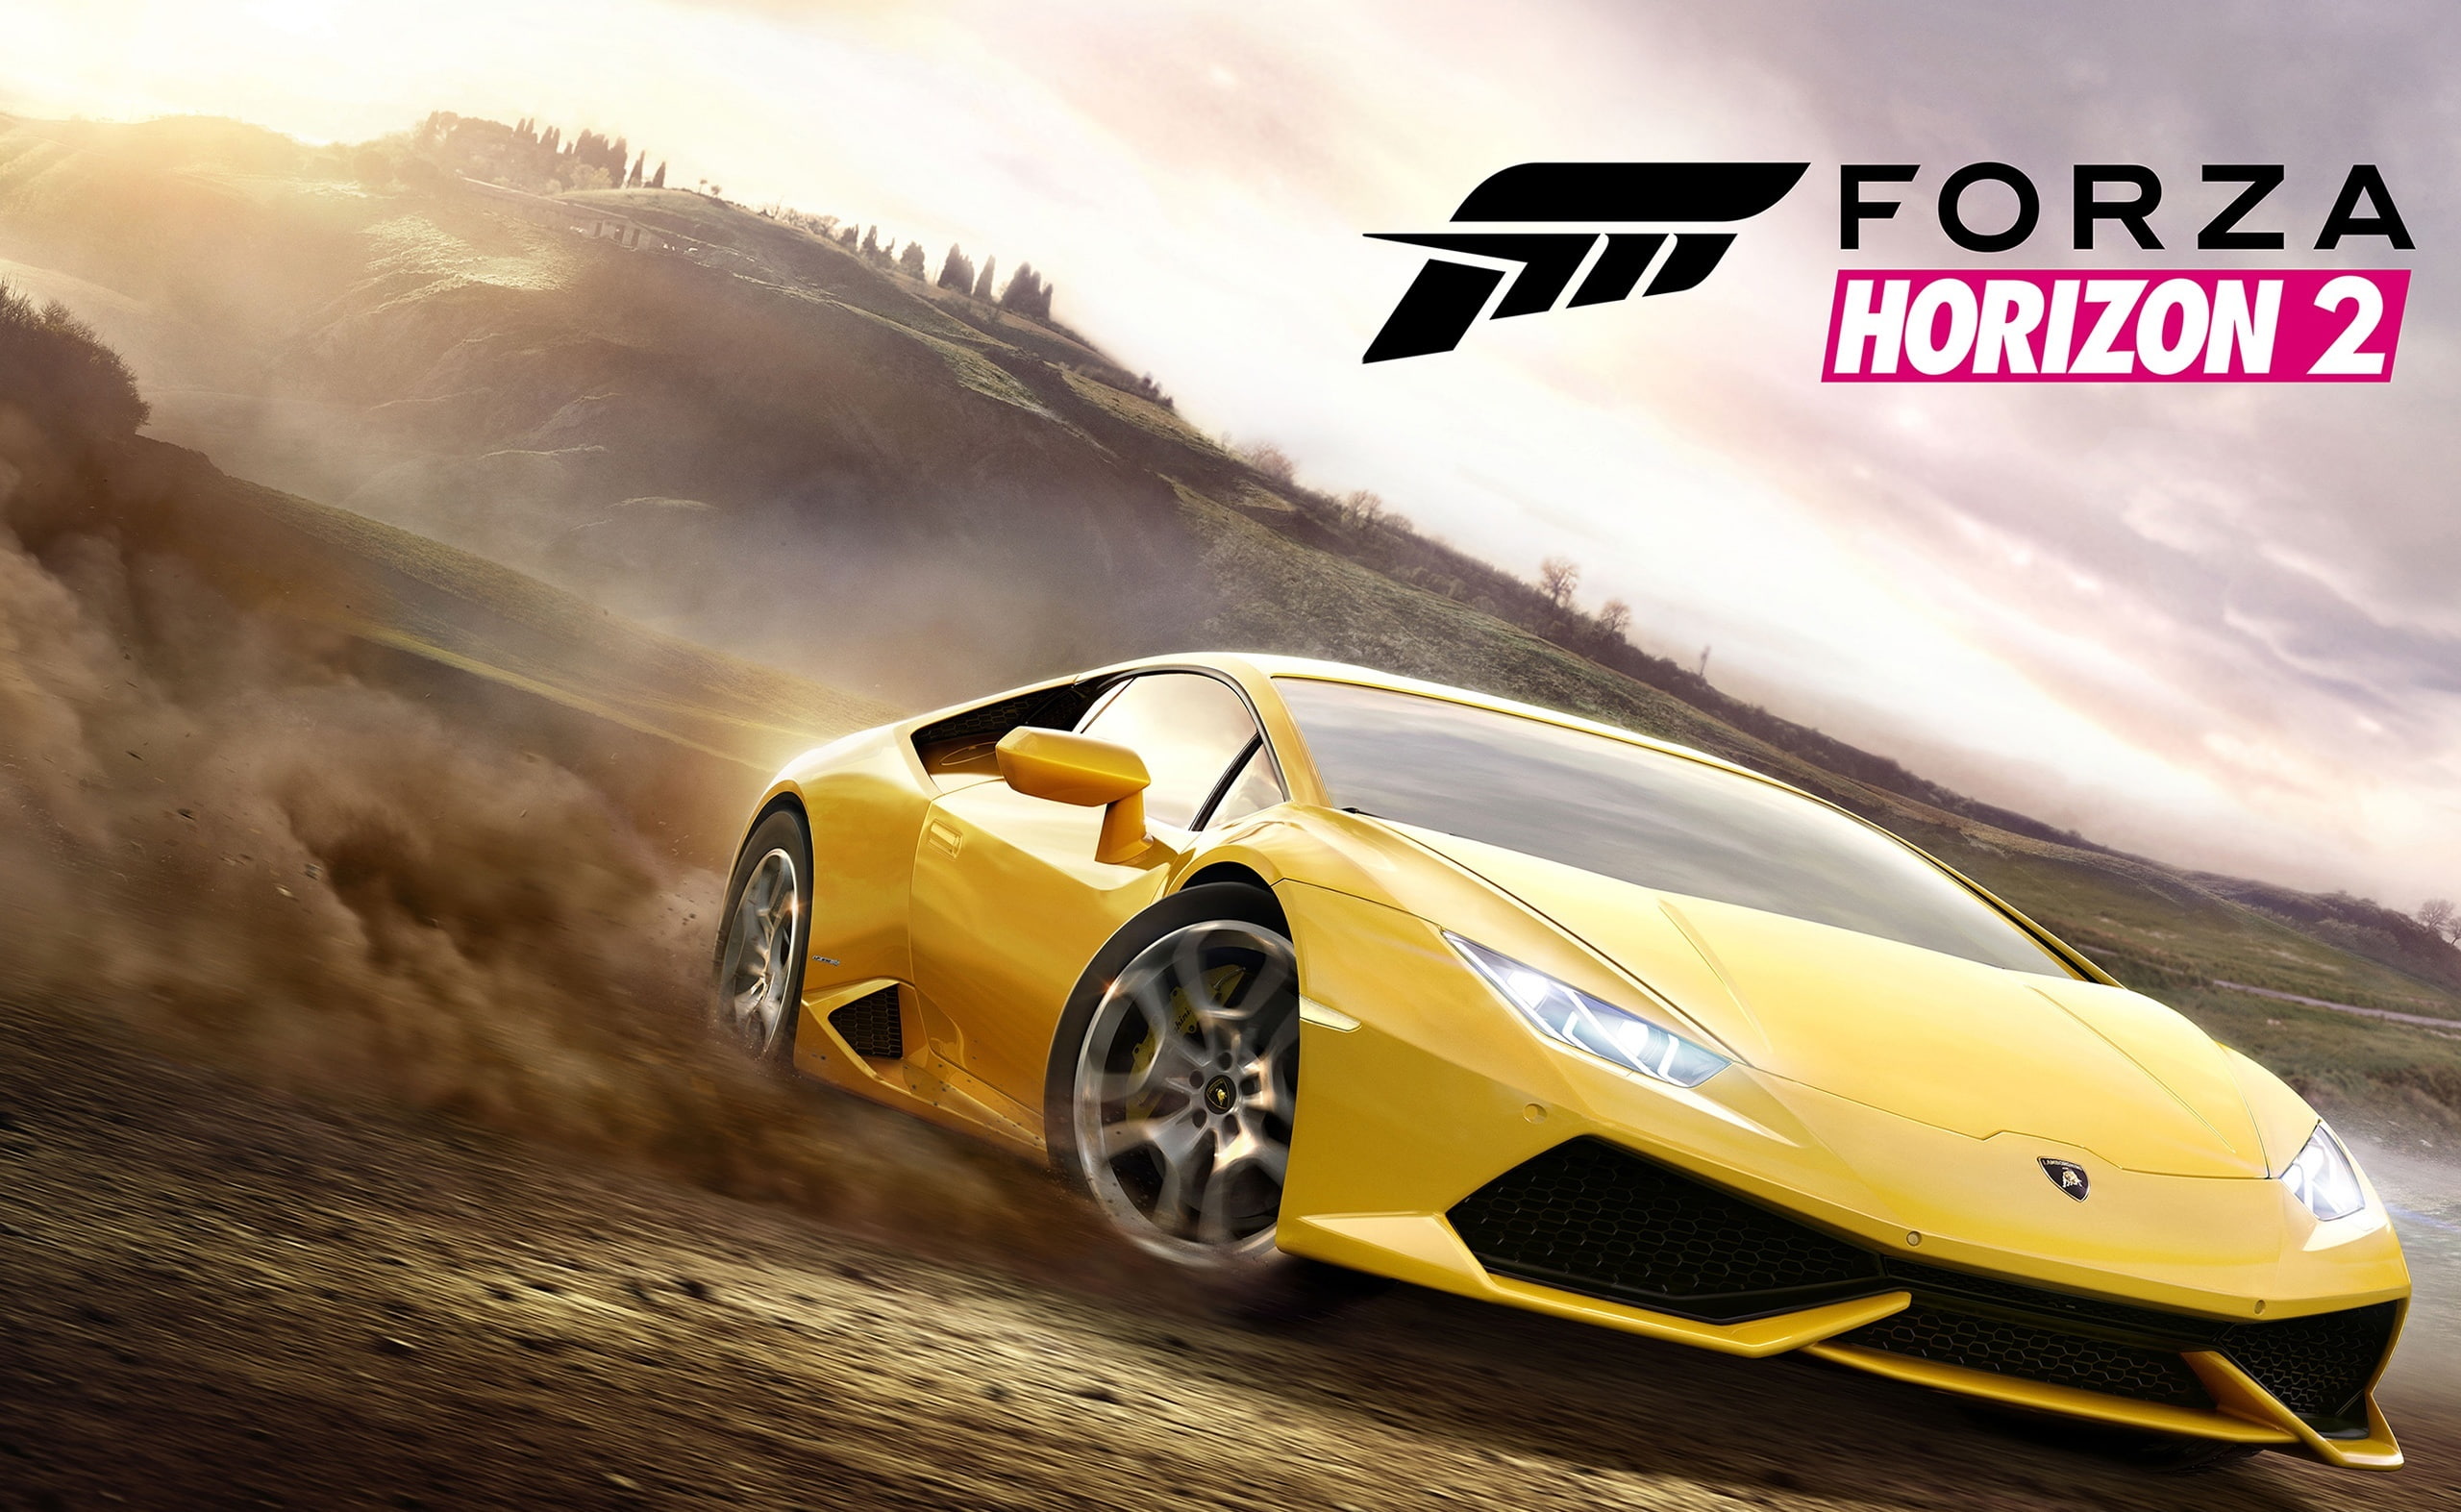 Forza Horizon 2, Forza Horizon 2 digital wallpaper, Games, Forza Motorsport